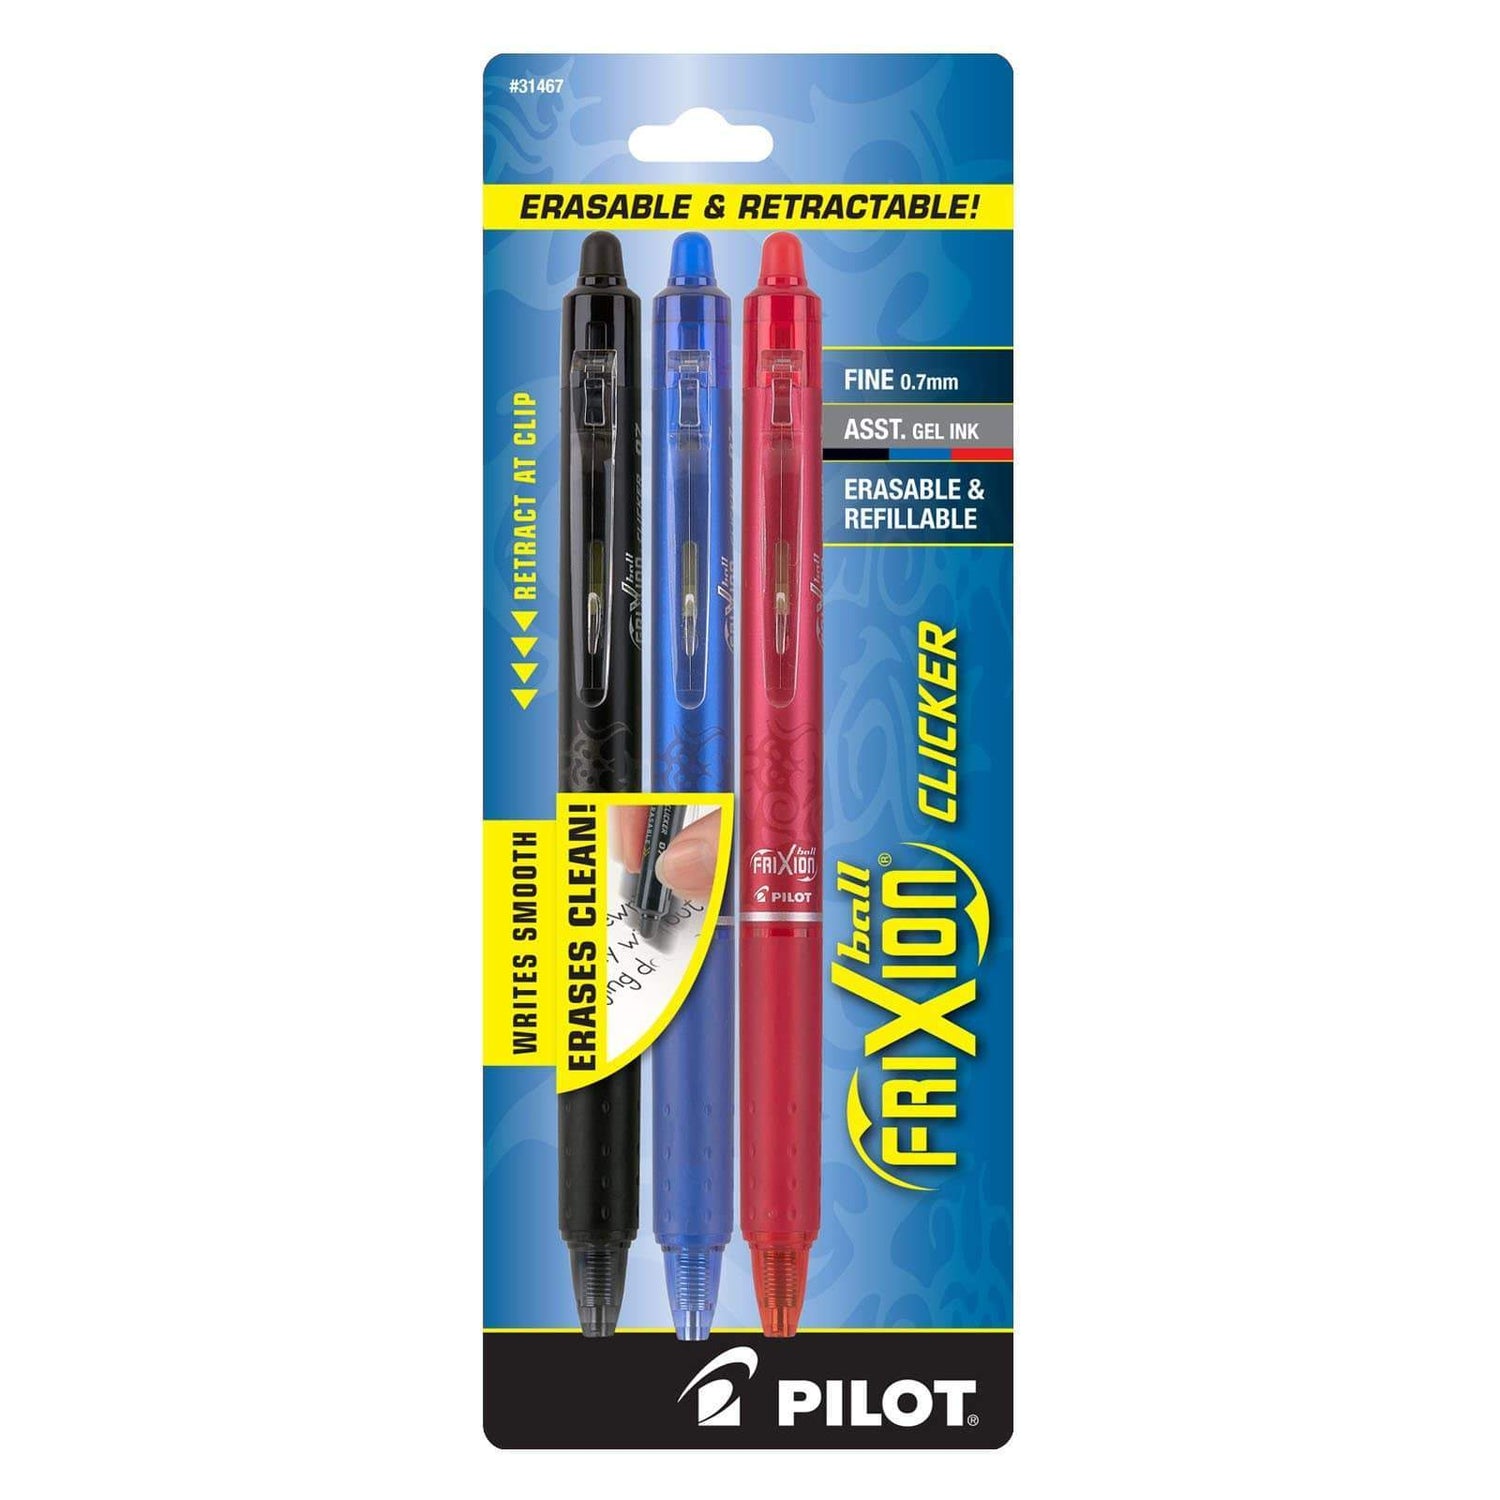 Erasable Colored Pens: 6 Pack